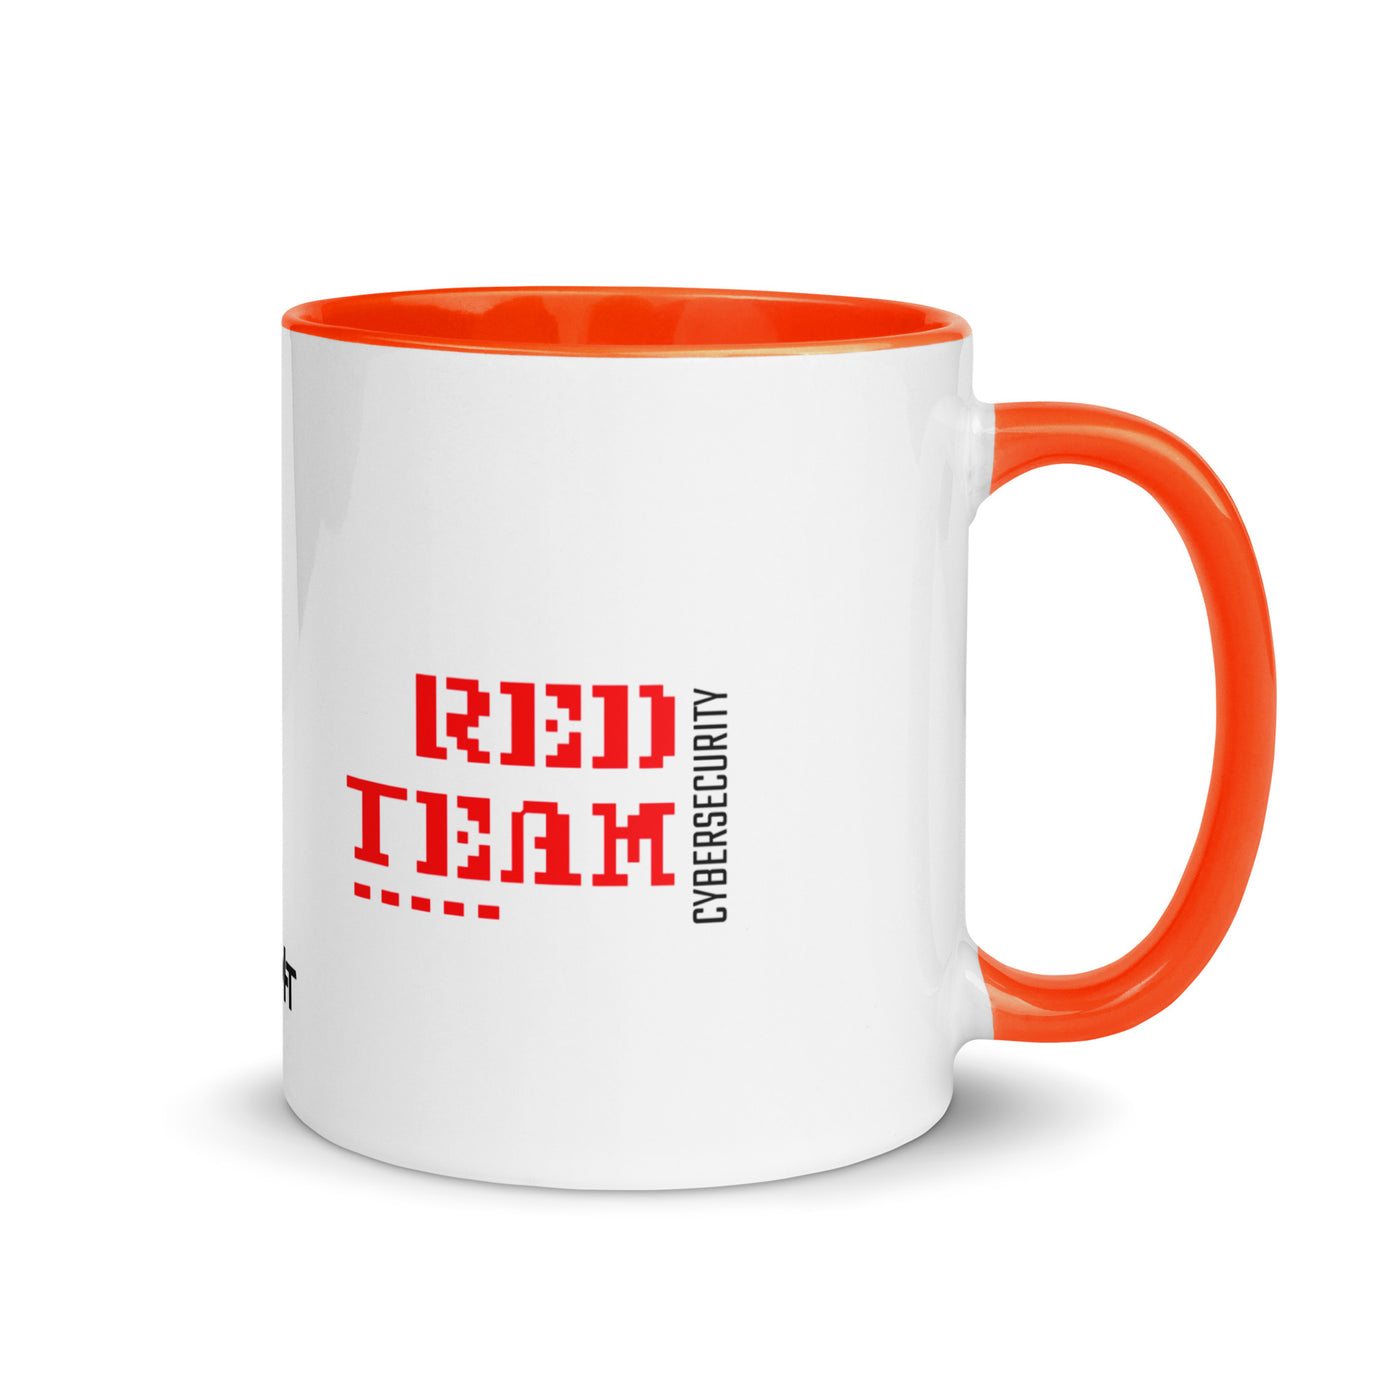 Cyber Security Red Team V15 - Mug with Color Inside